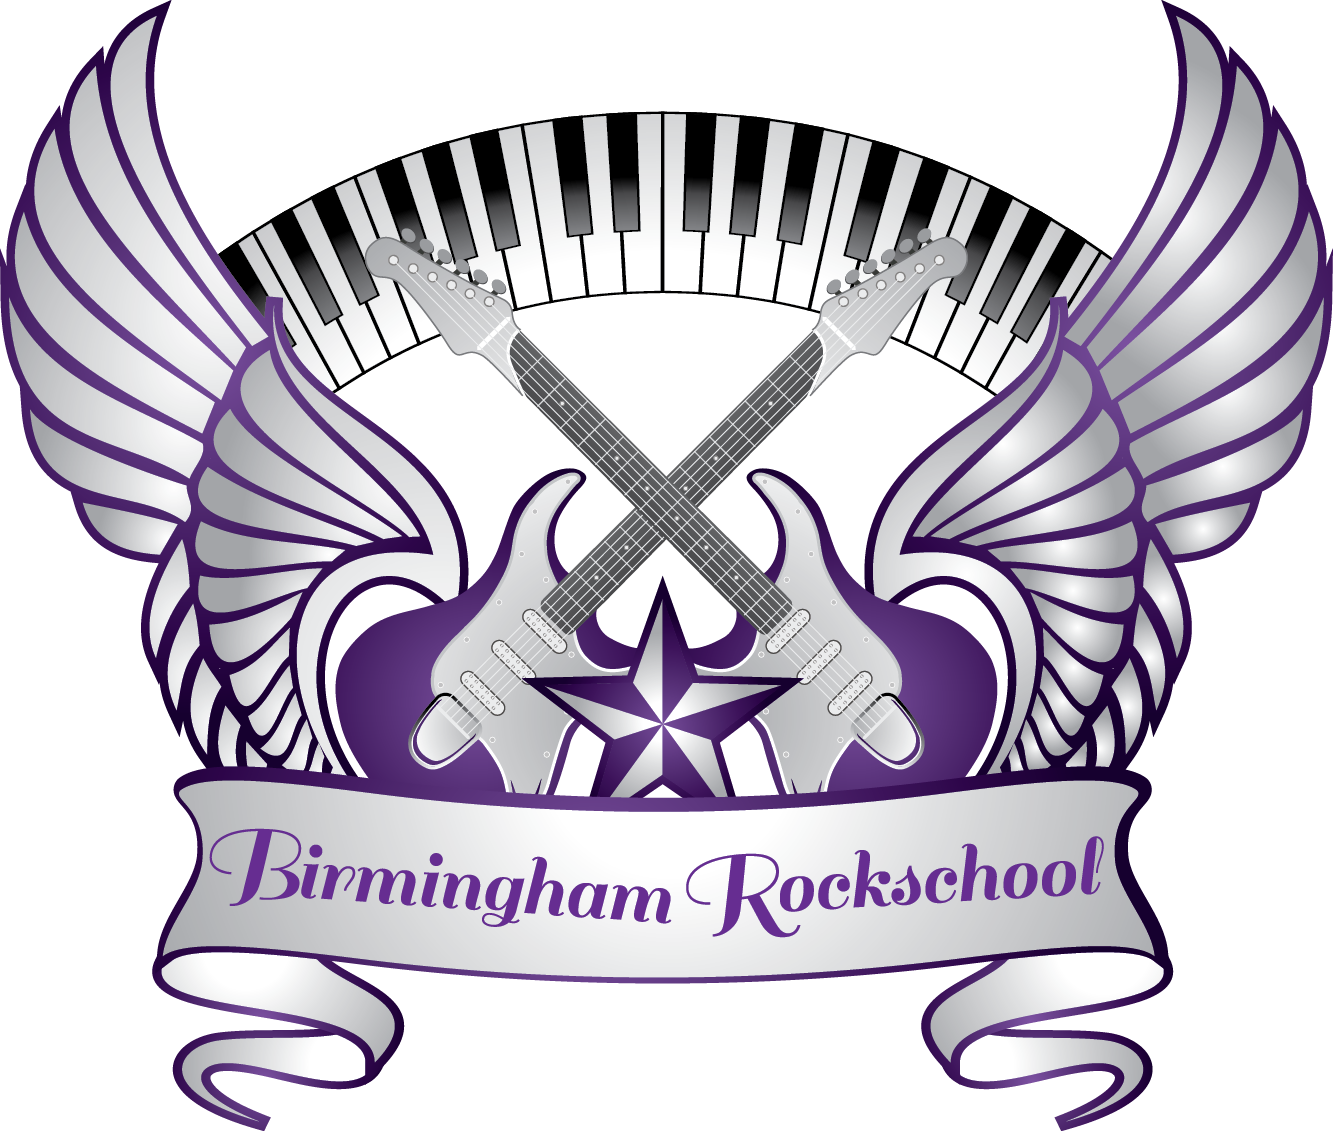 Birmingham Rockschool